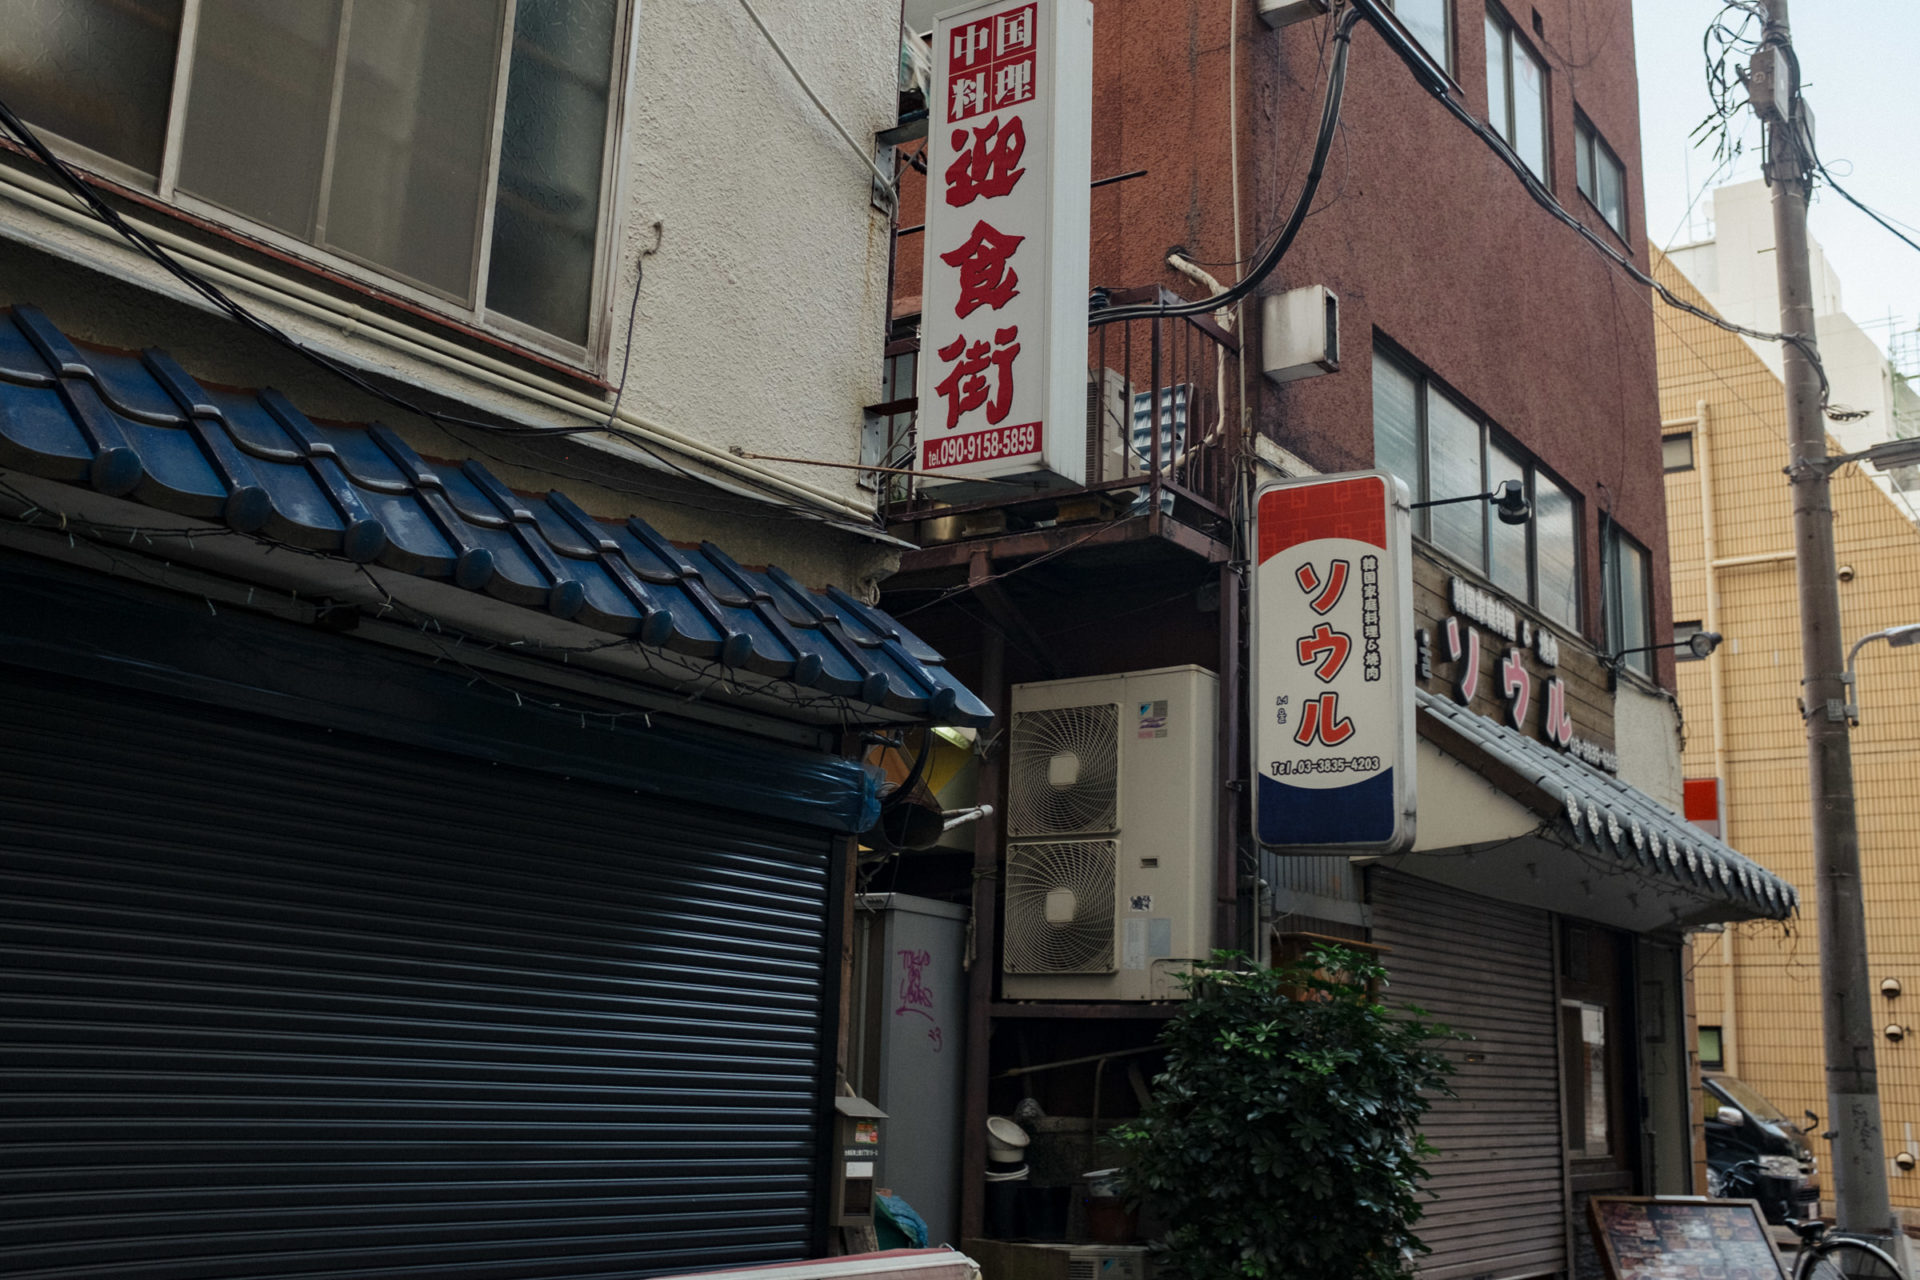 Kimchi Yokocho: Ueno's Ameyoko Korean Market Evicted